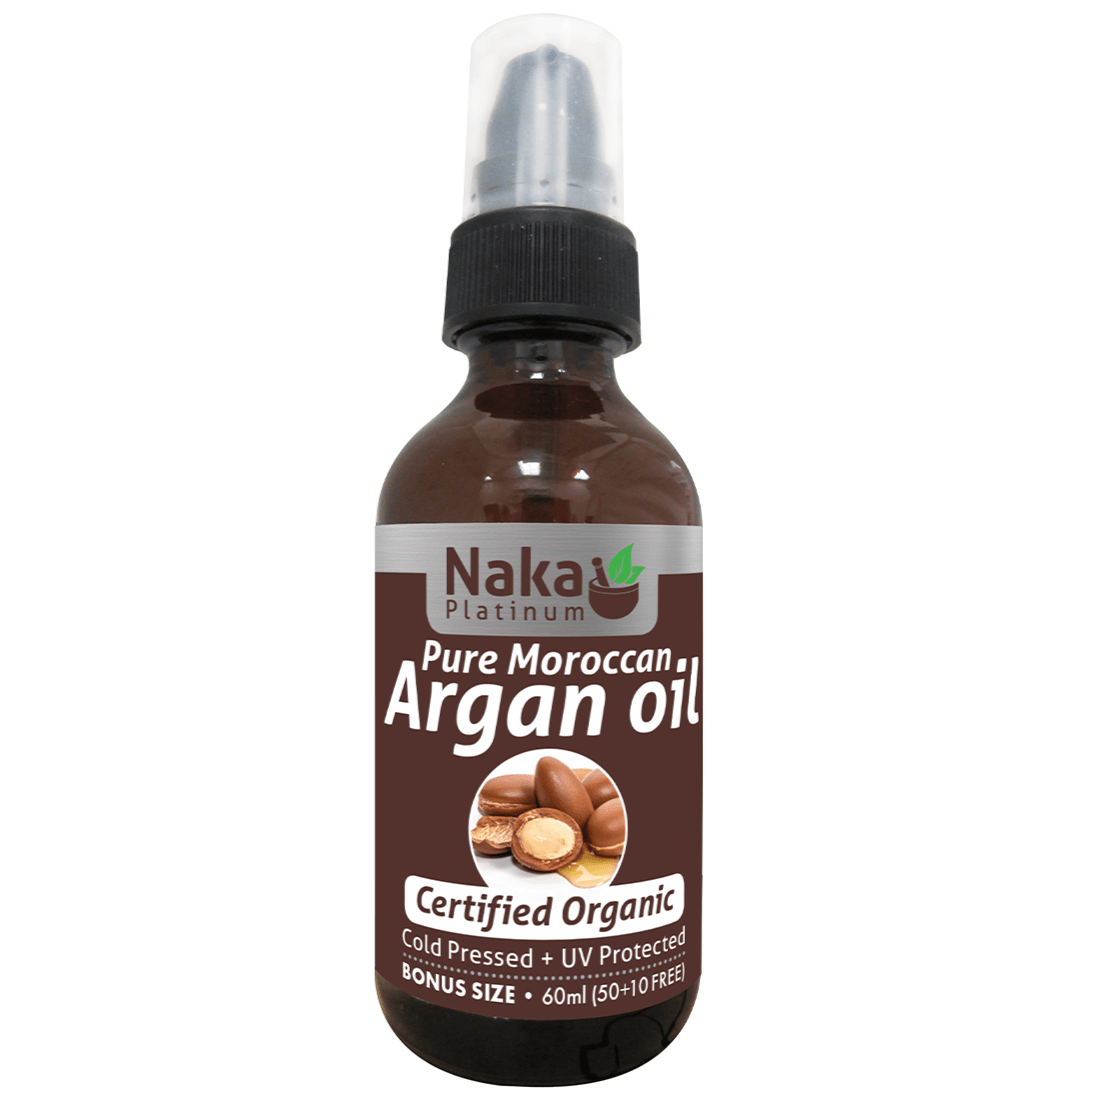 Naka Platinum Pure Moroccan Argan Oil 60ml Beauty Oils at Village Vitamin Store